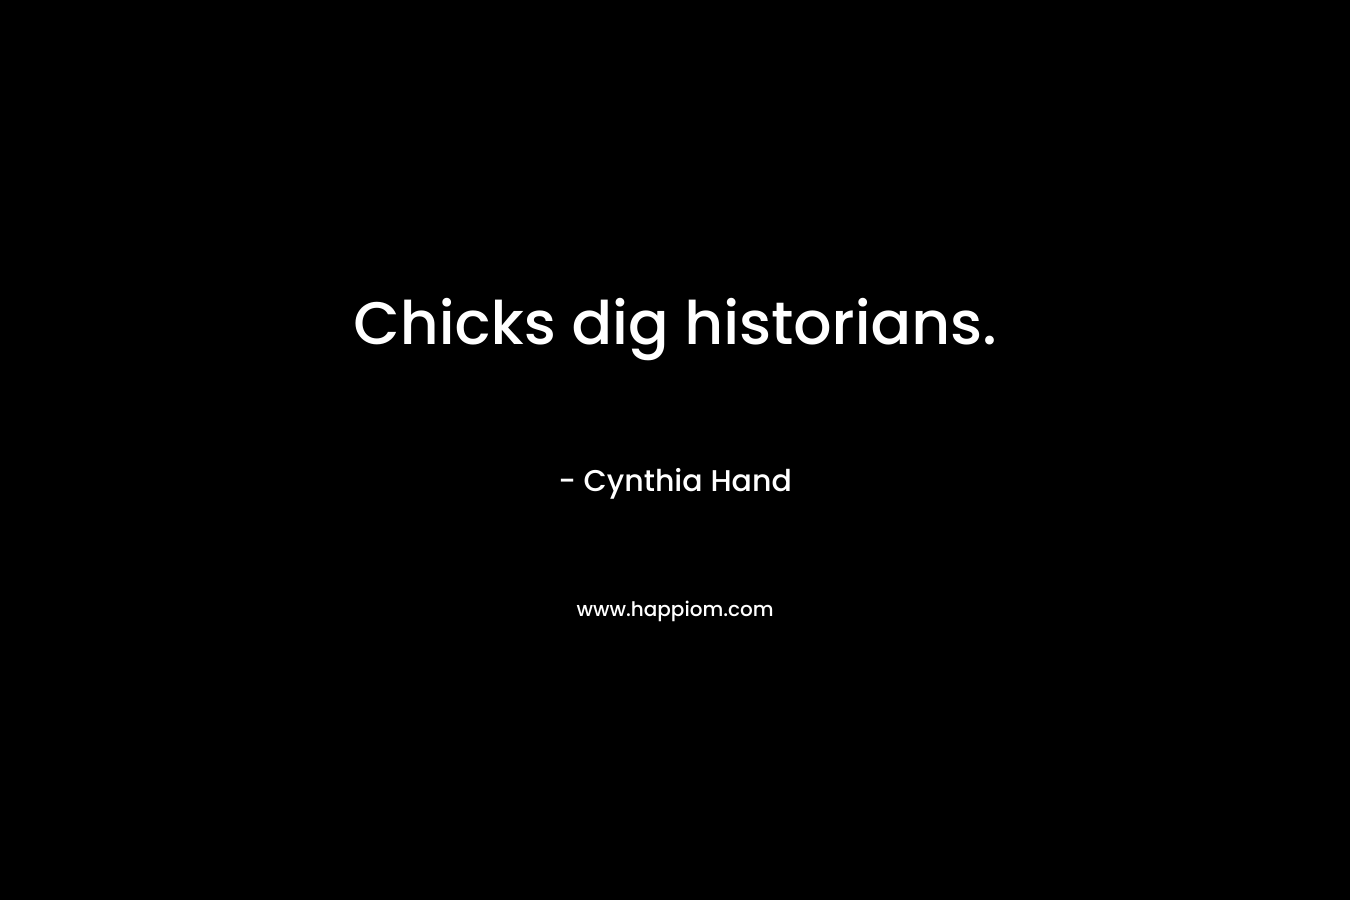 Chicks dig historians. – Cynthia Hand